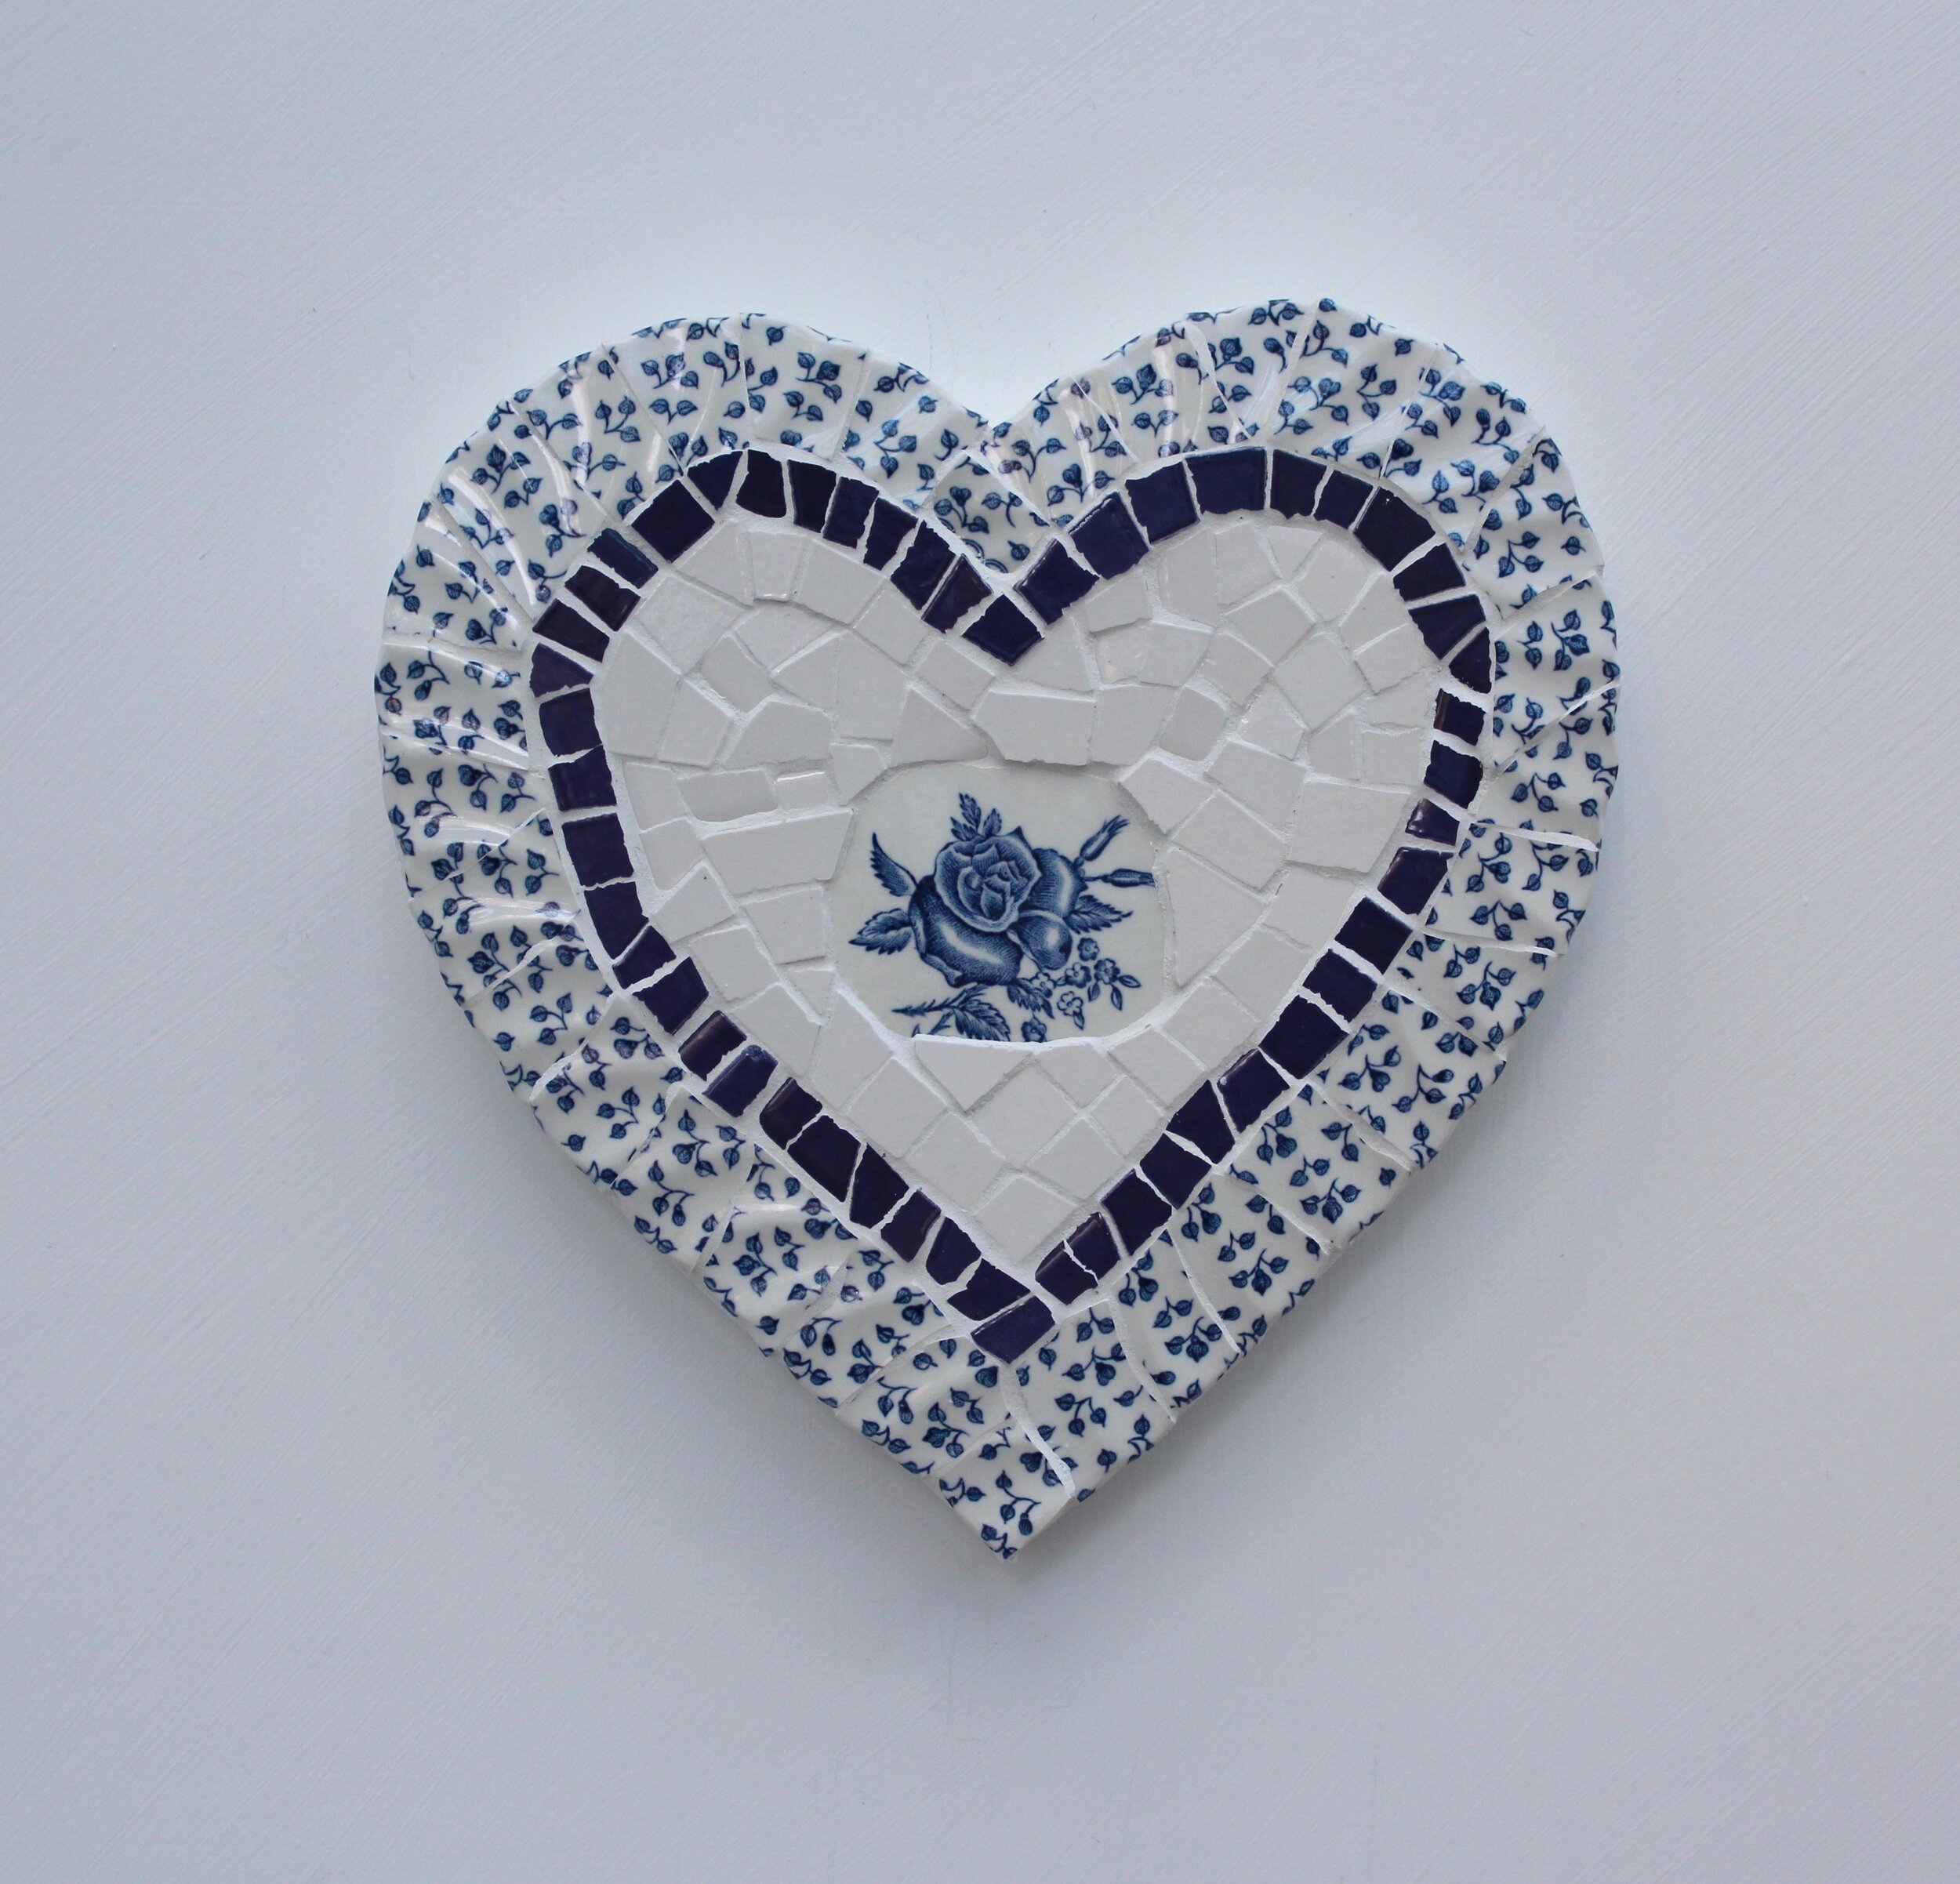 Handmade mosaic heart